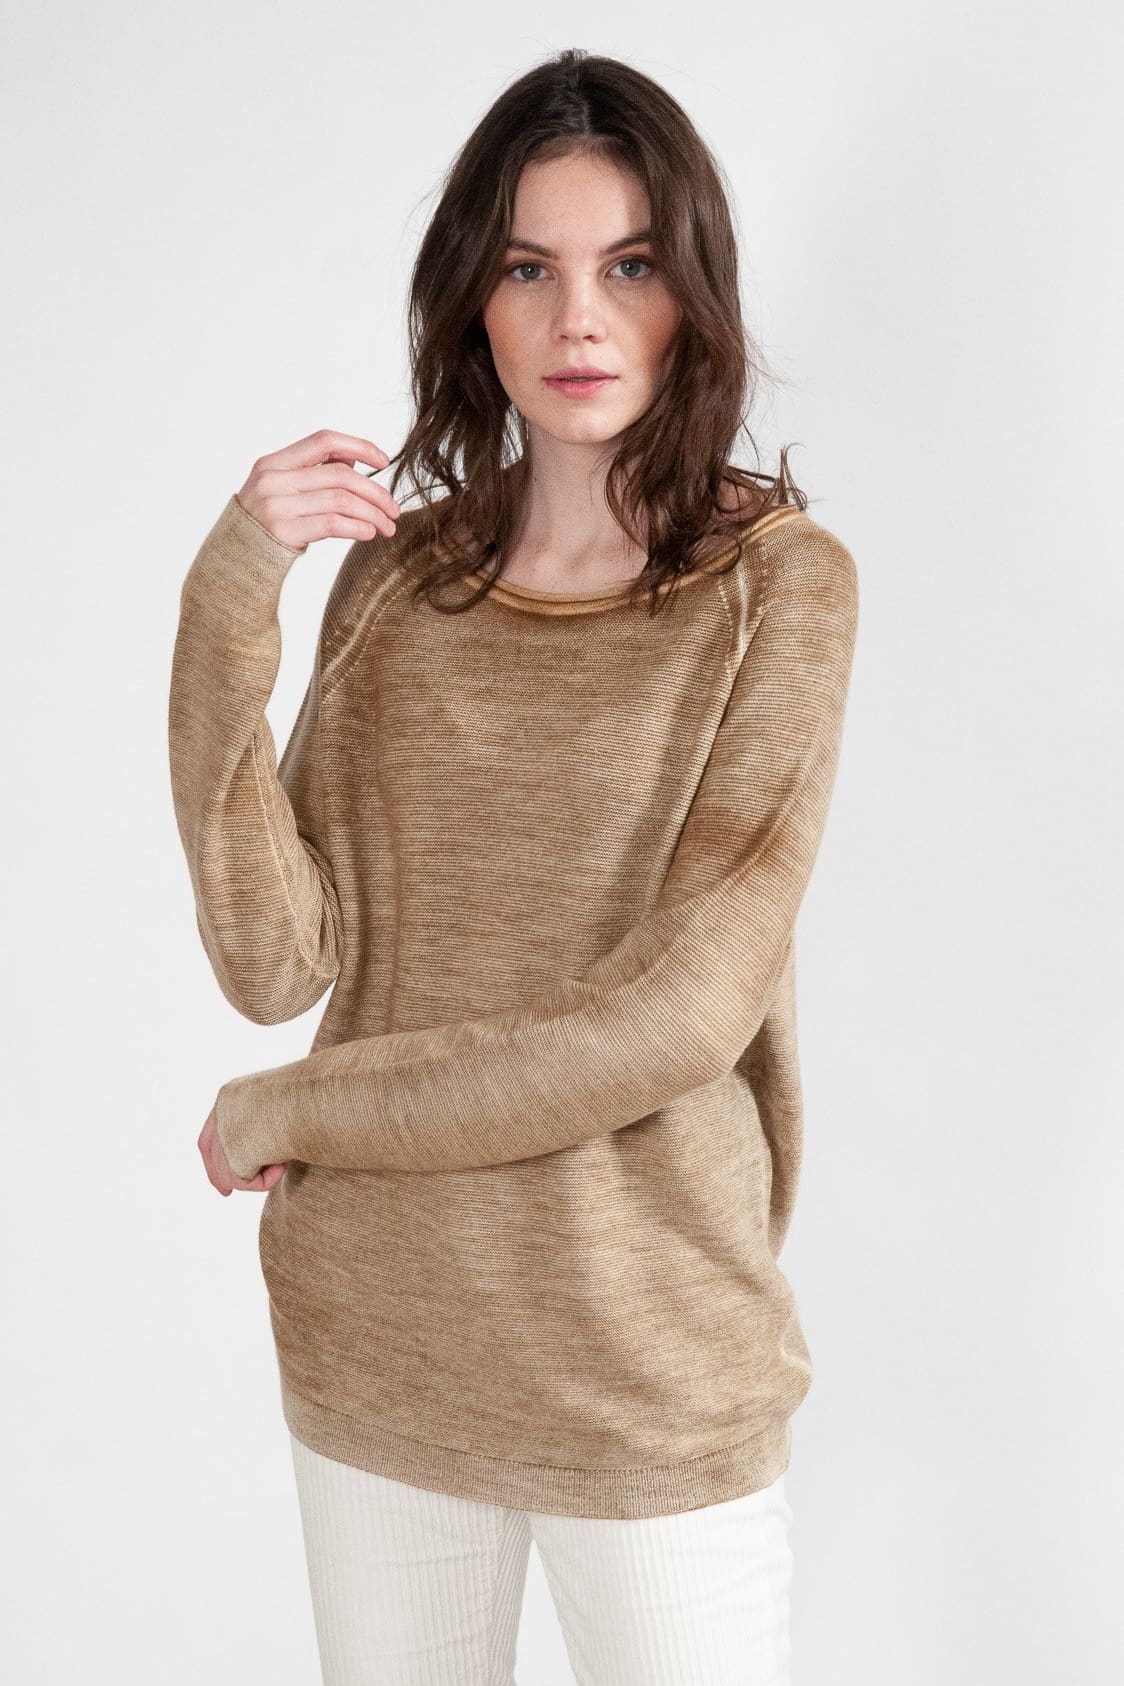 Errol Wood - Sweaters